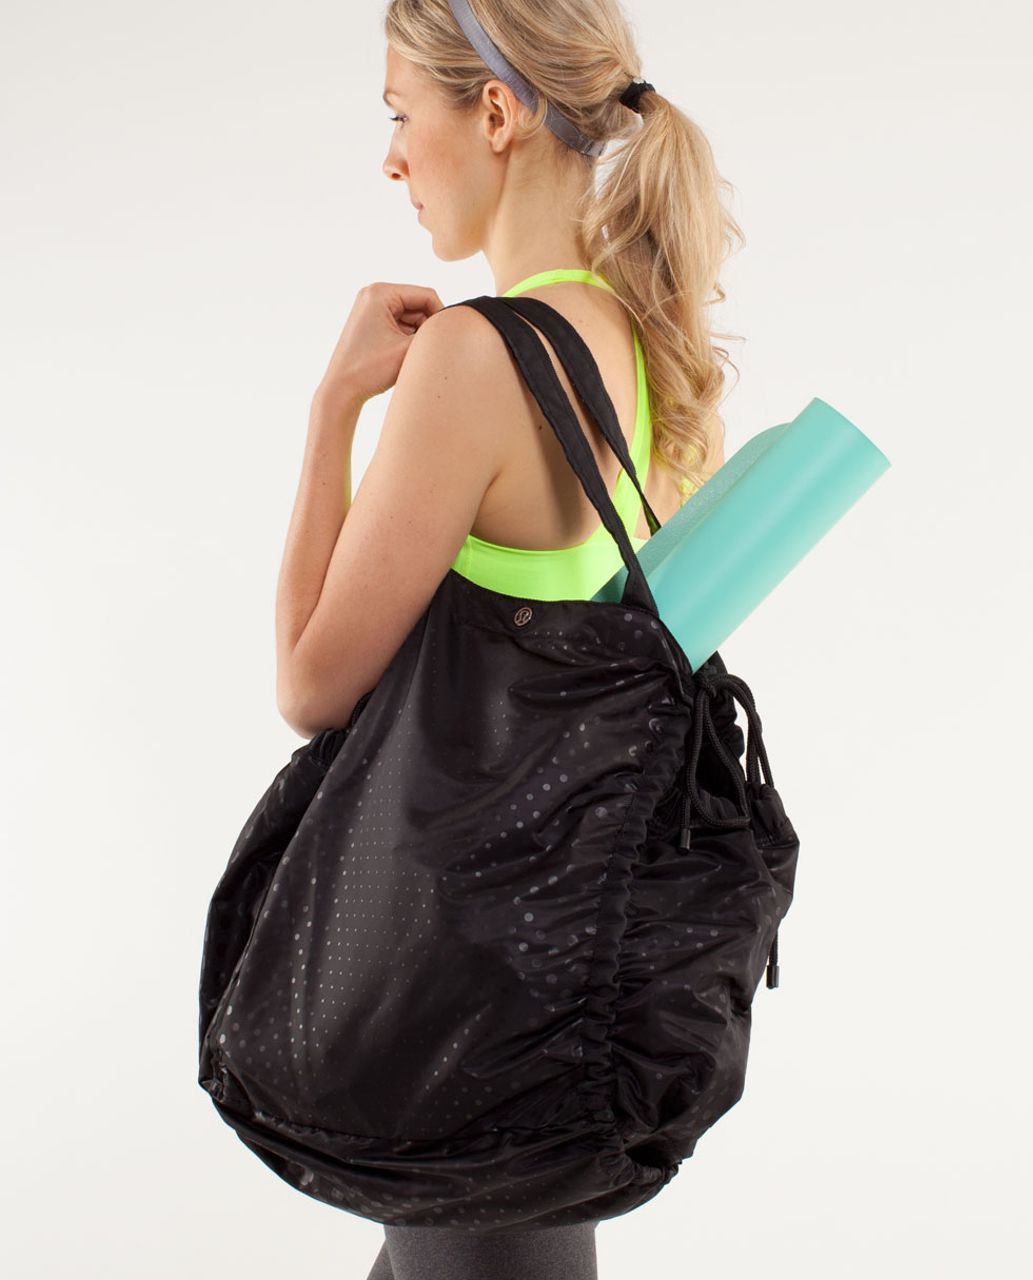 Lululemon Pack Your Practice Bag - Faded Dot Embossed Black